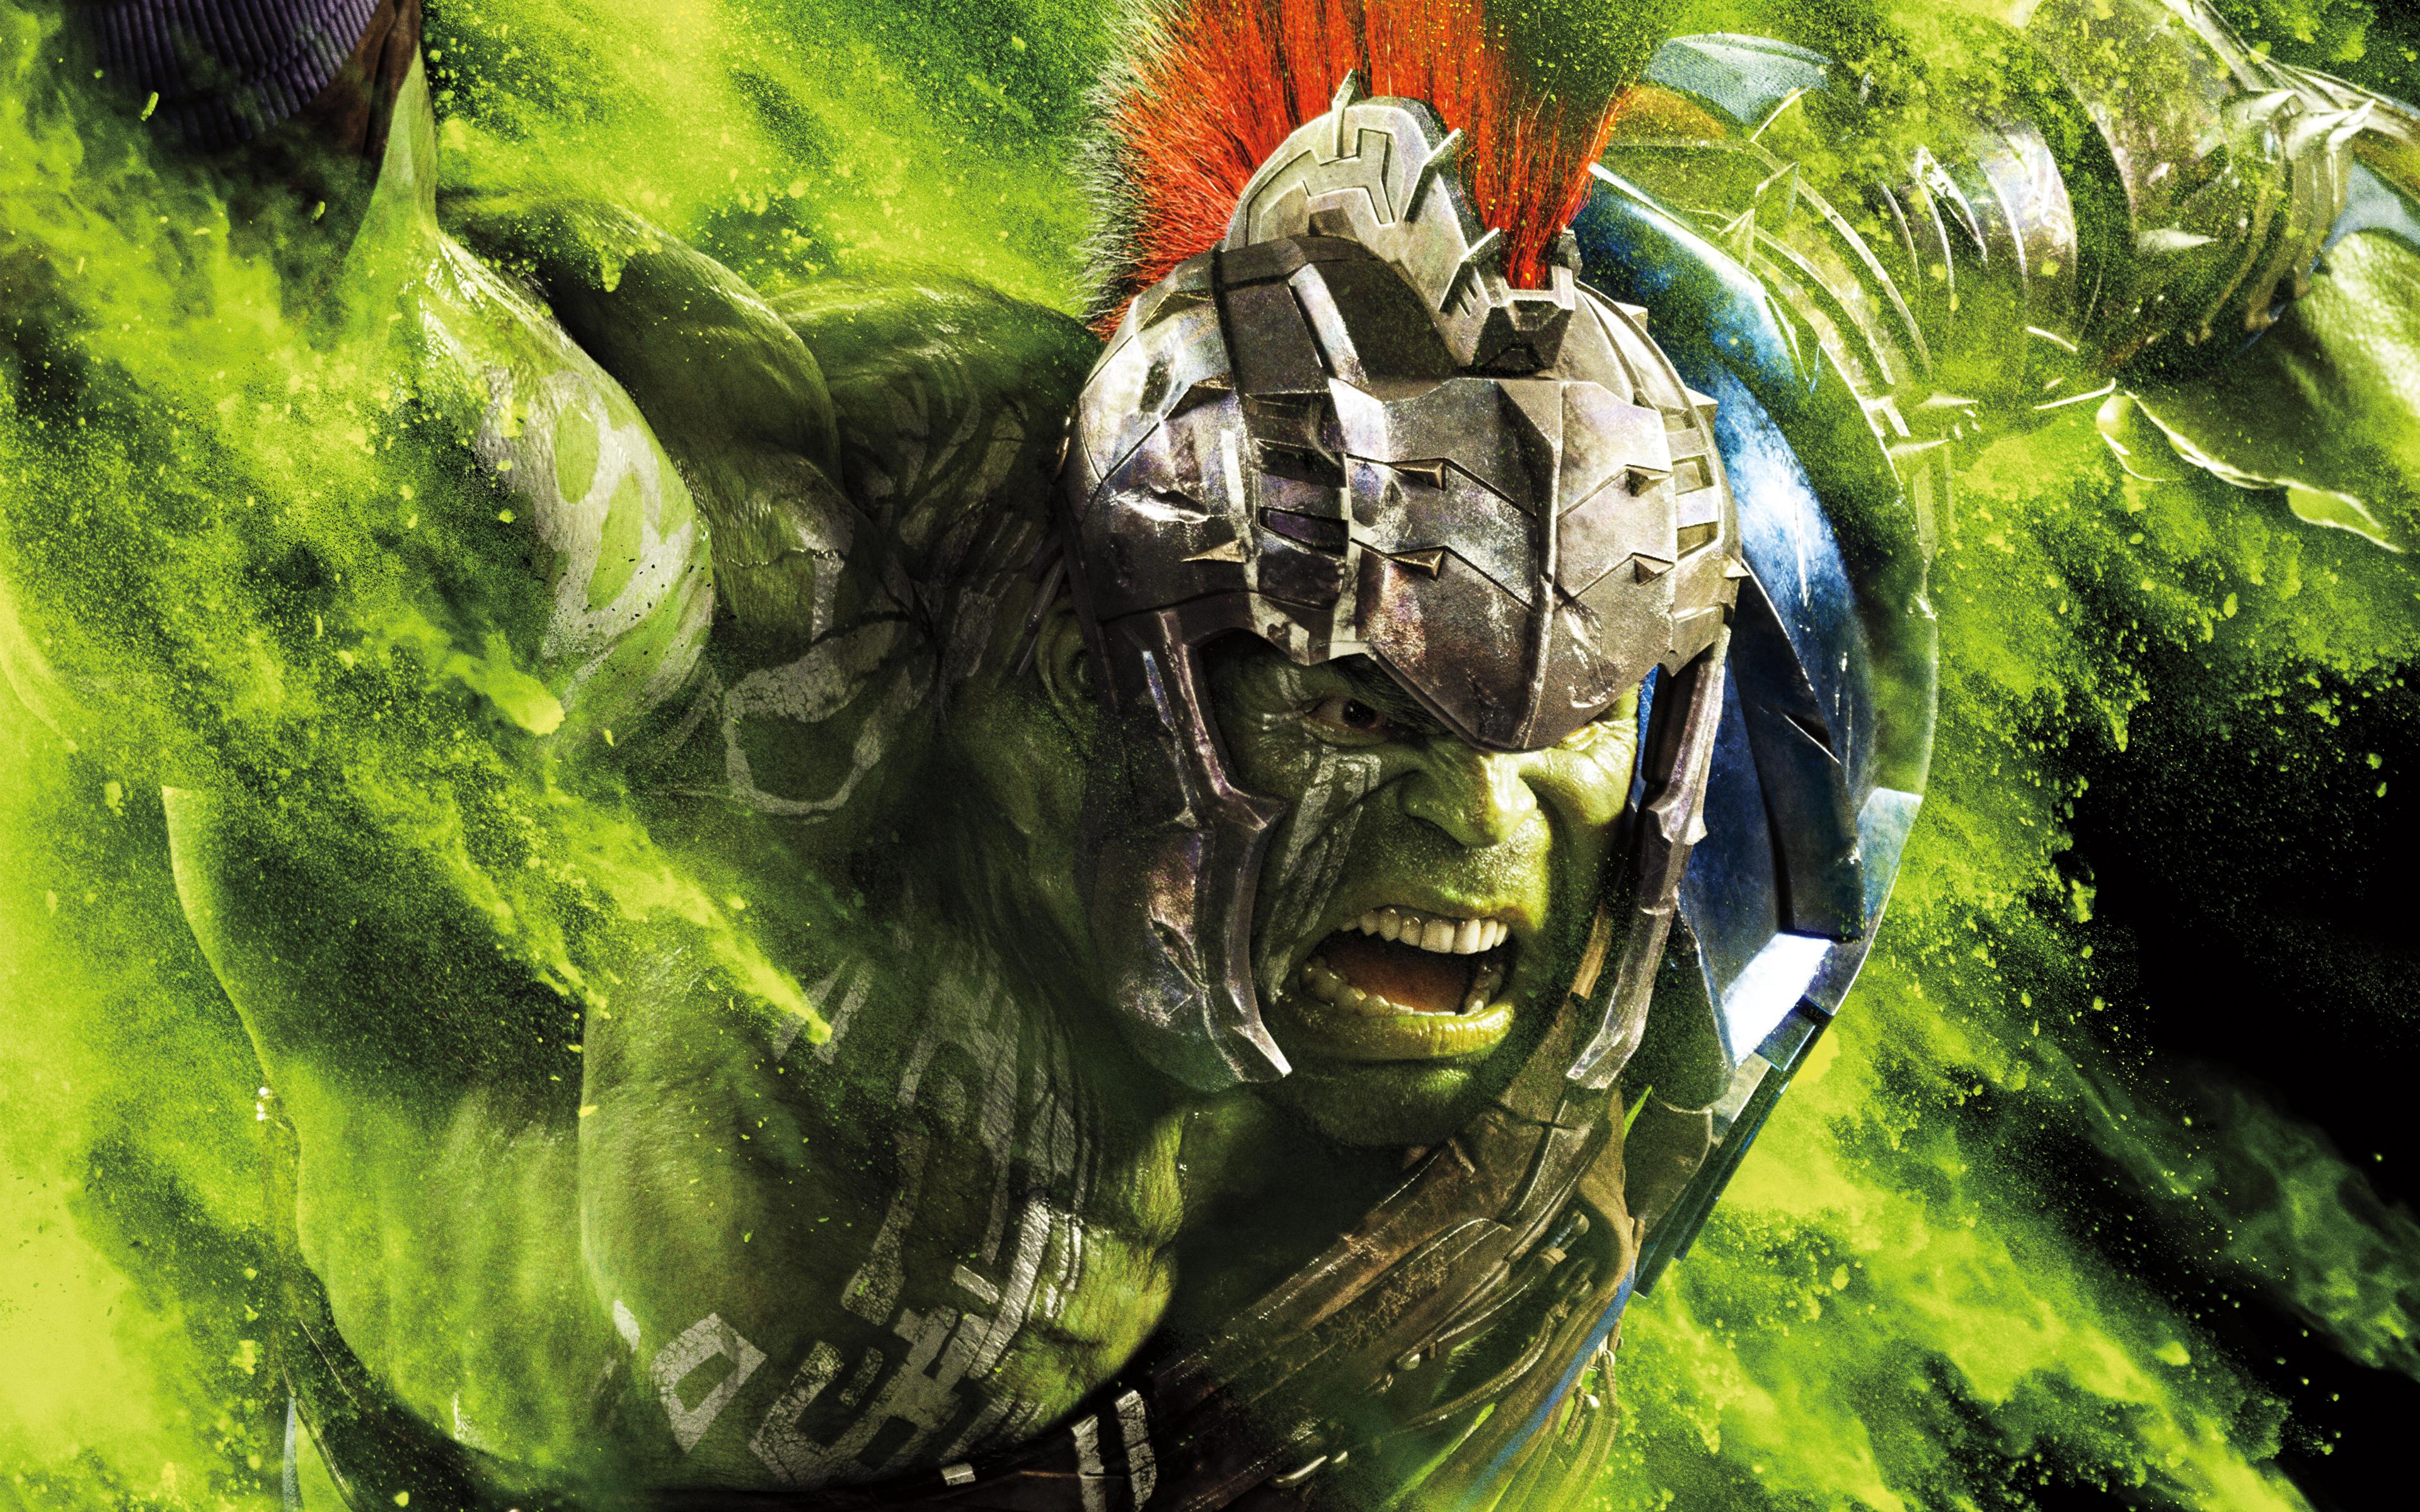 Hulk 1080P, 2K, 4K, 5K HD wallpapers free download | Wallpaper Flare